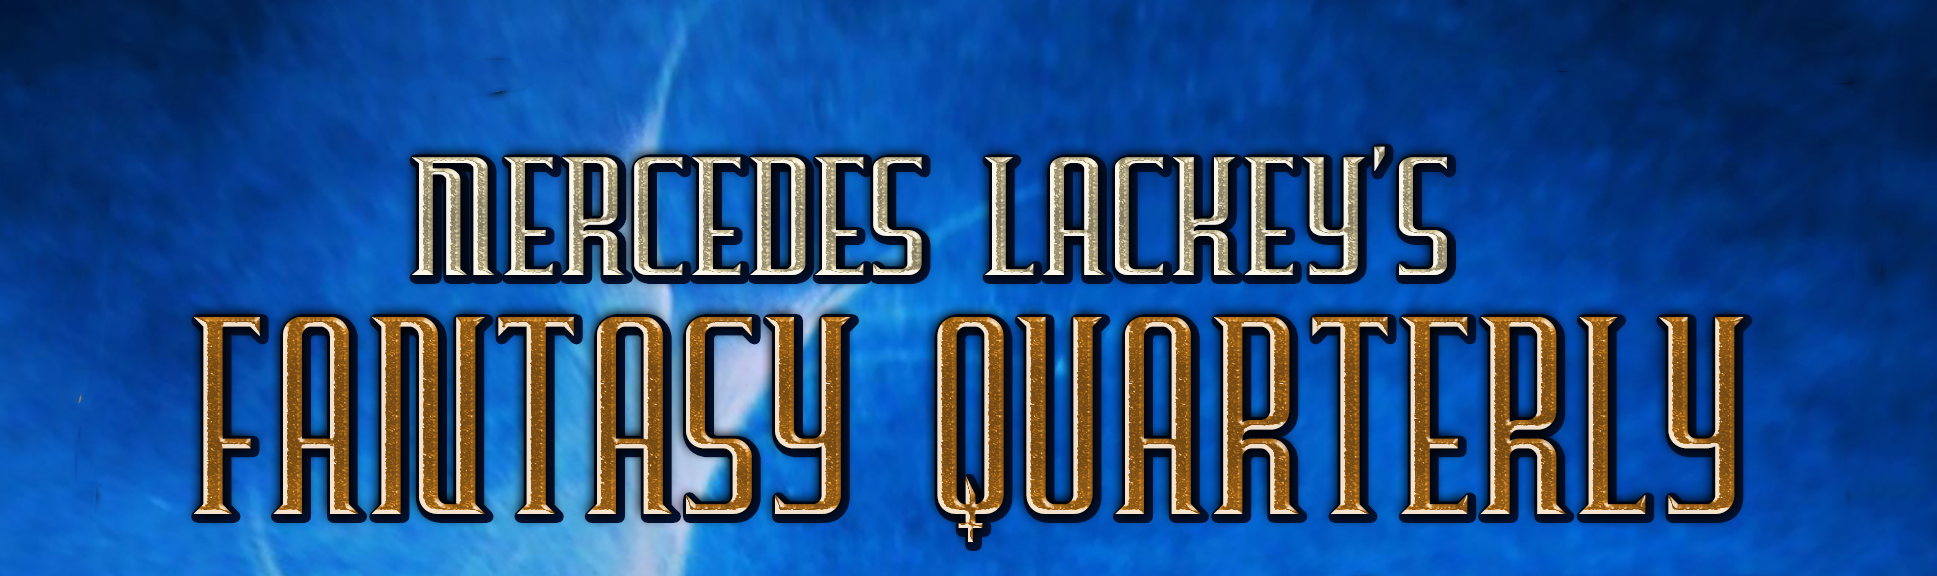 Coming Soon on Kickstarter: The Mercedes Lackey's Fantasy Quarterly